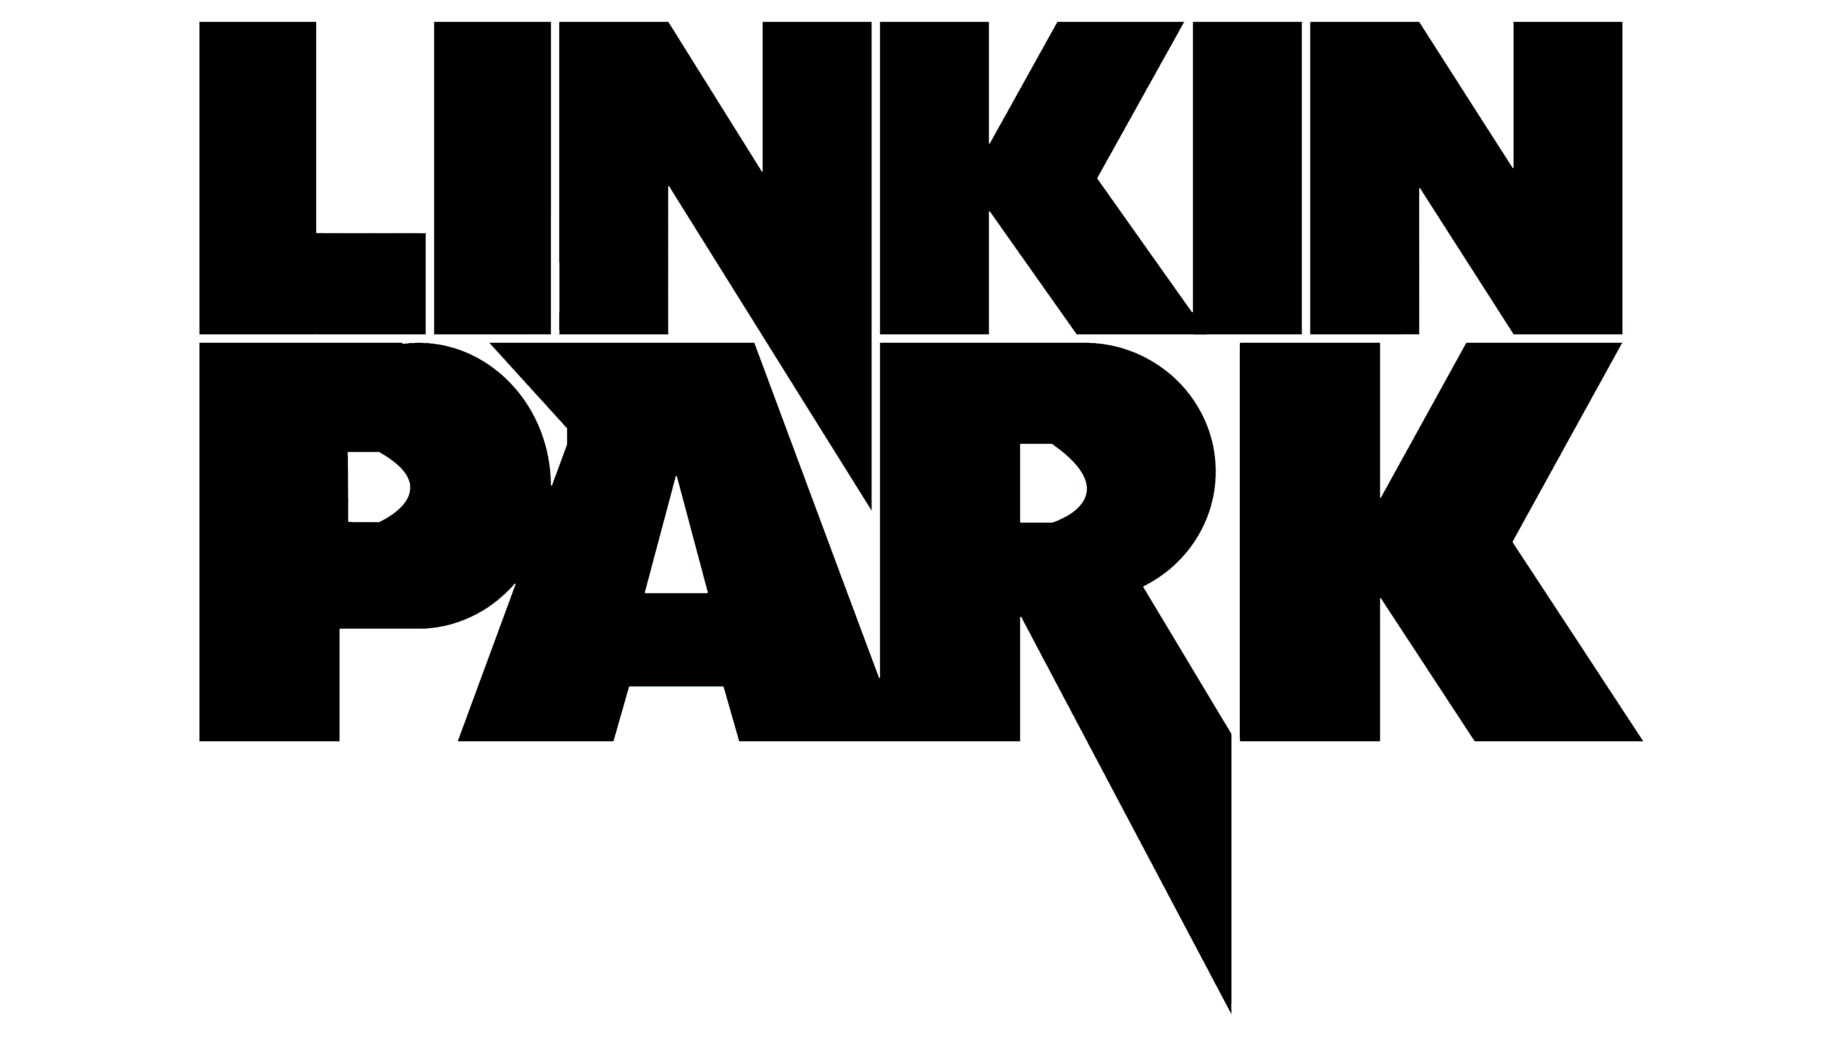 Linkin park sign 2007 2010